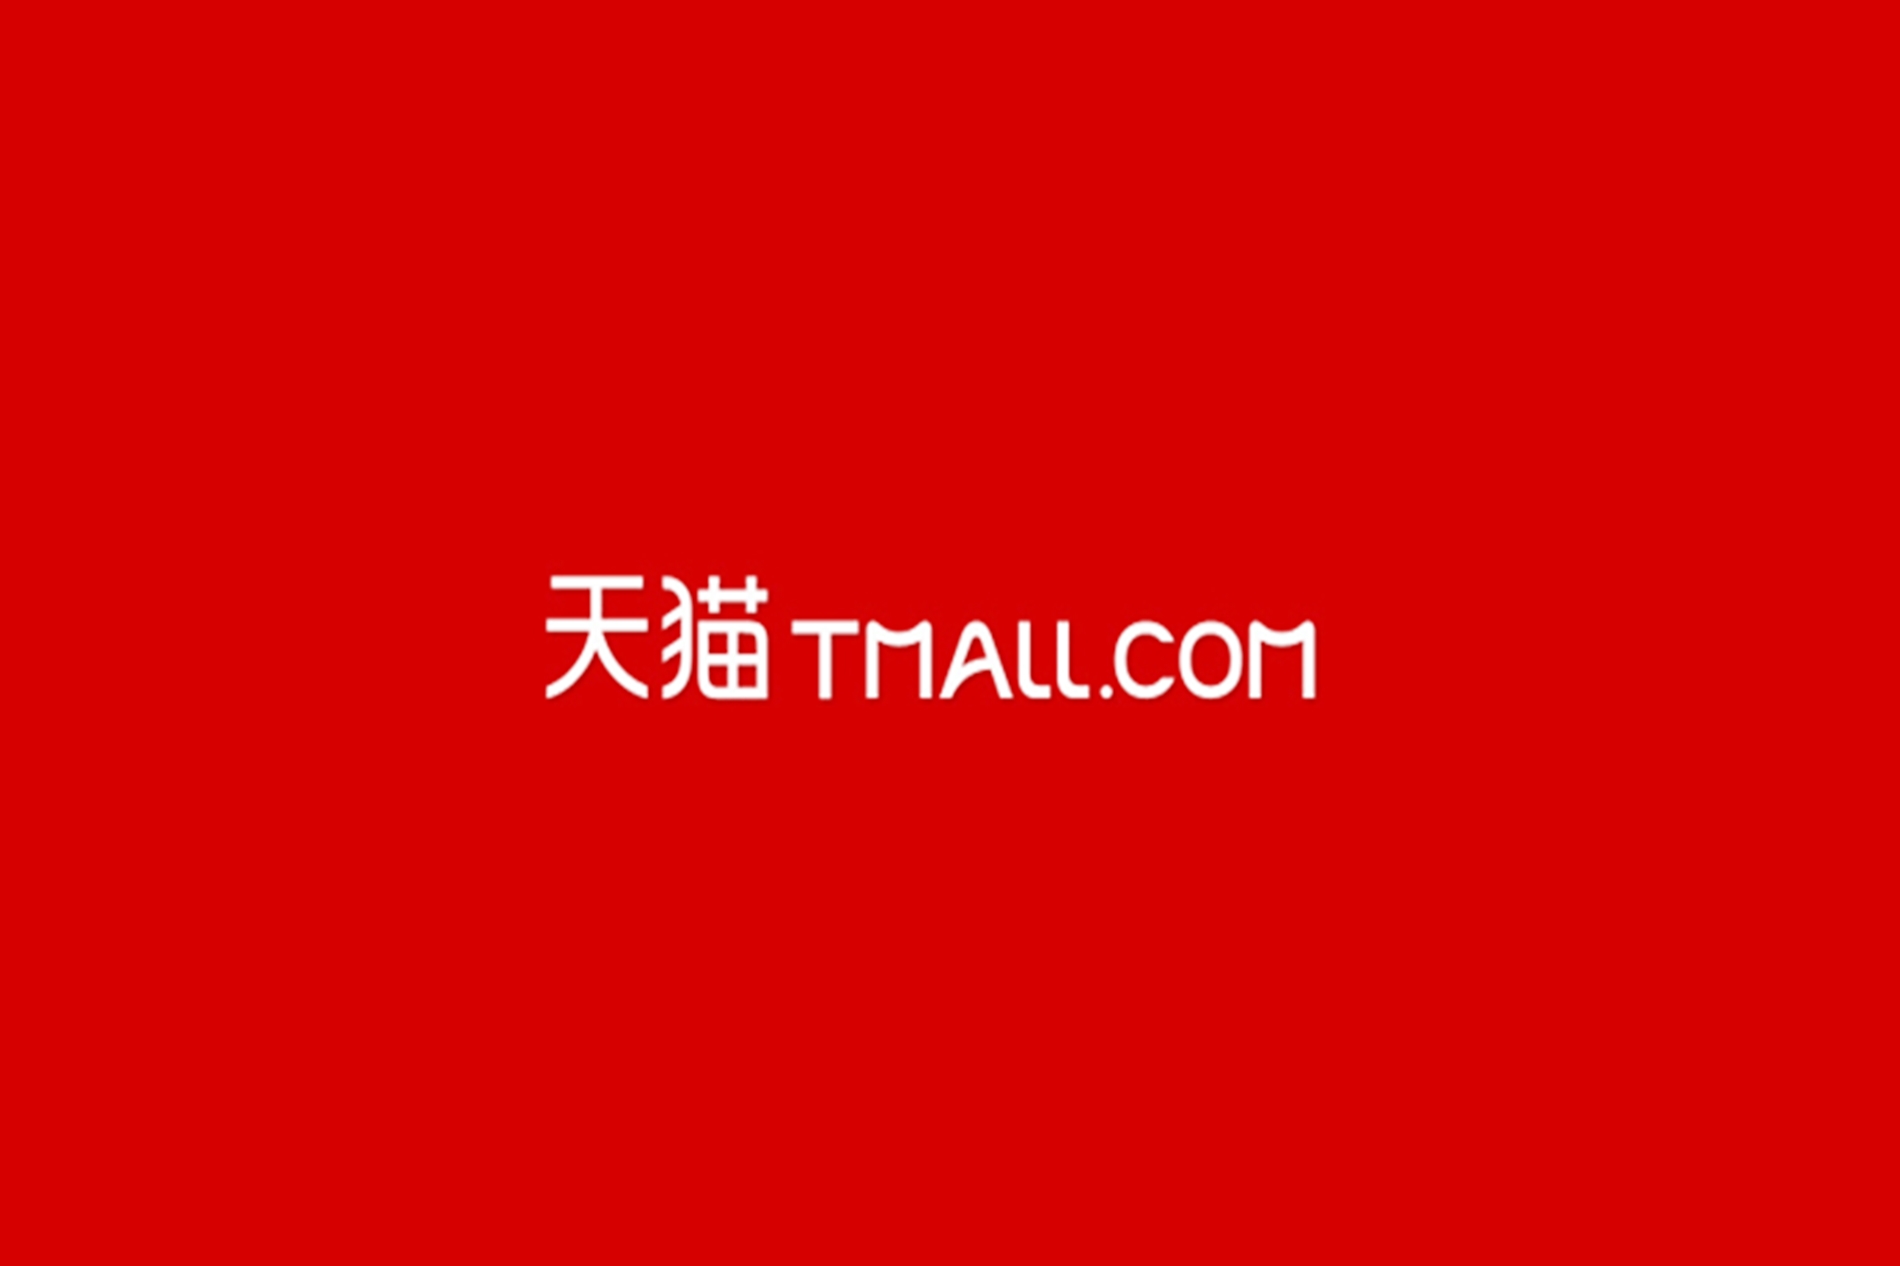 tmall-logo